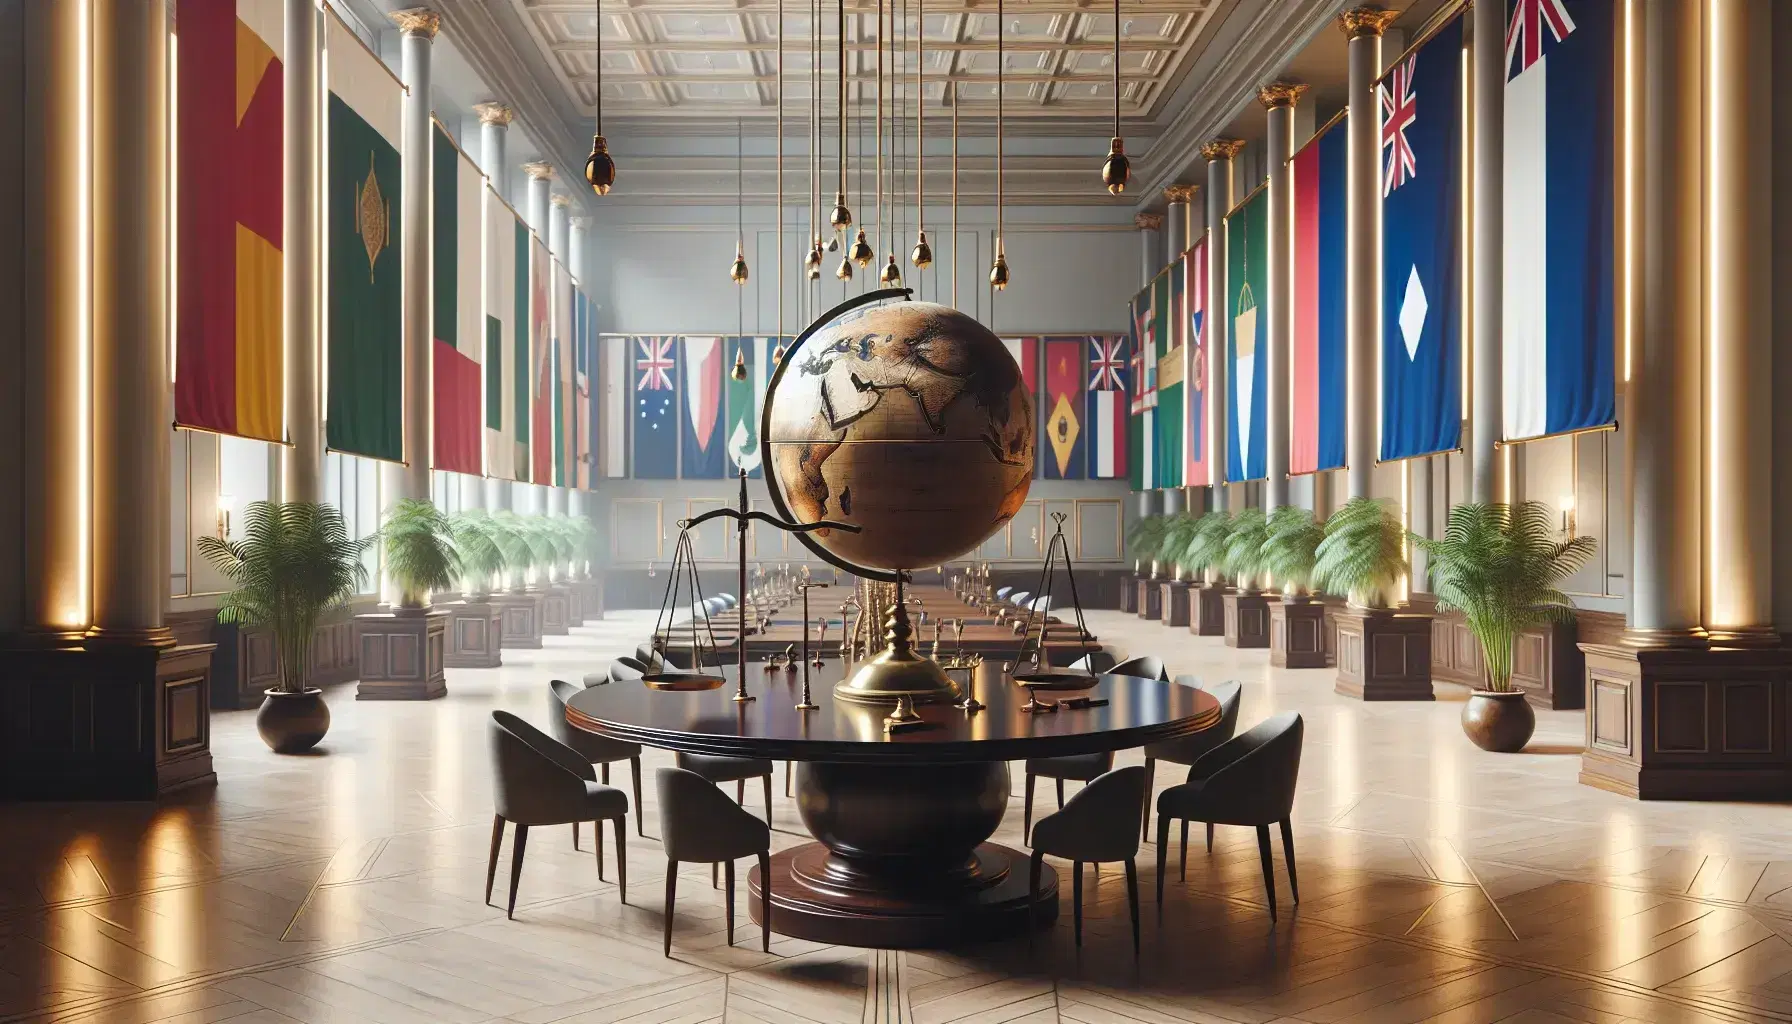 Sala amplia con mesa ovalada de madera oscura, sillas altas azules, globo terráqueo, balanza de bronce y martillo, junto a banderas lisas y planta verde.